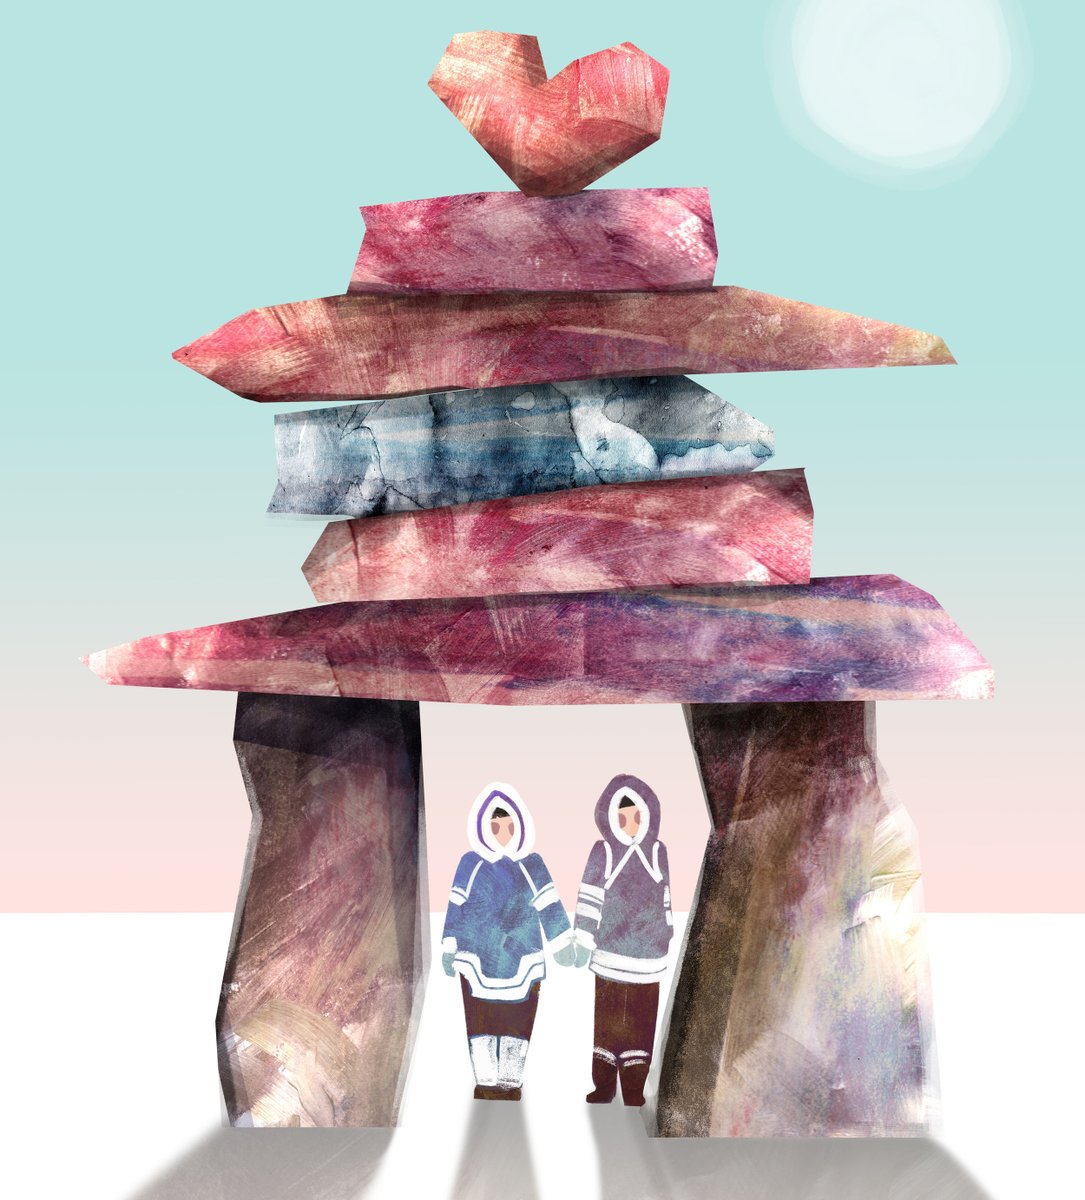 True love found under the inuksuk ♥️⁠
⁠
⁠#childrensartist #inuit #inuksuk
⁠
 #art #illustration #artist #instaart #artwork #artoftheday #creative #illustrator #digitalpainting  #digitalillustration #digitalartist #artsy #love  #childrensillustration